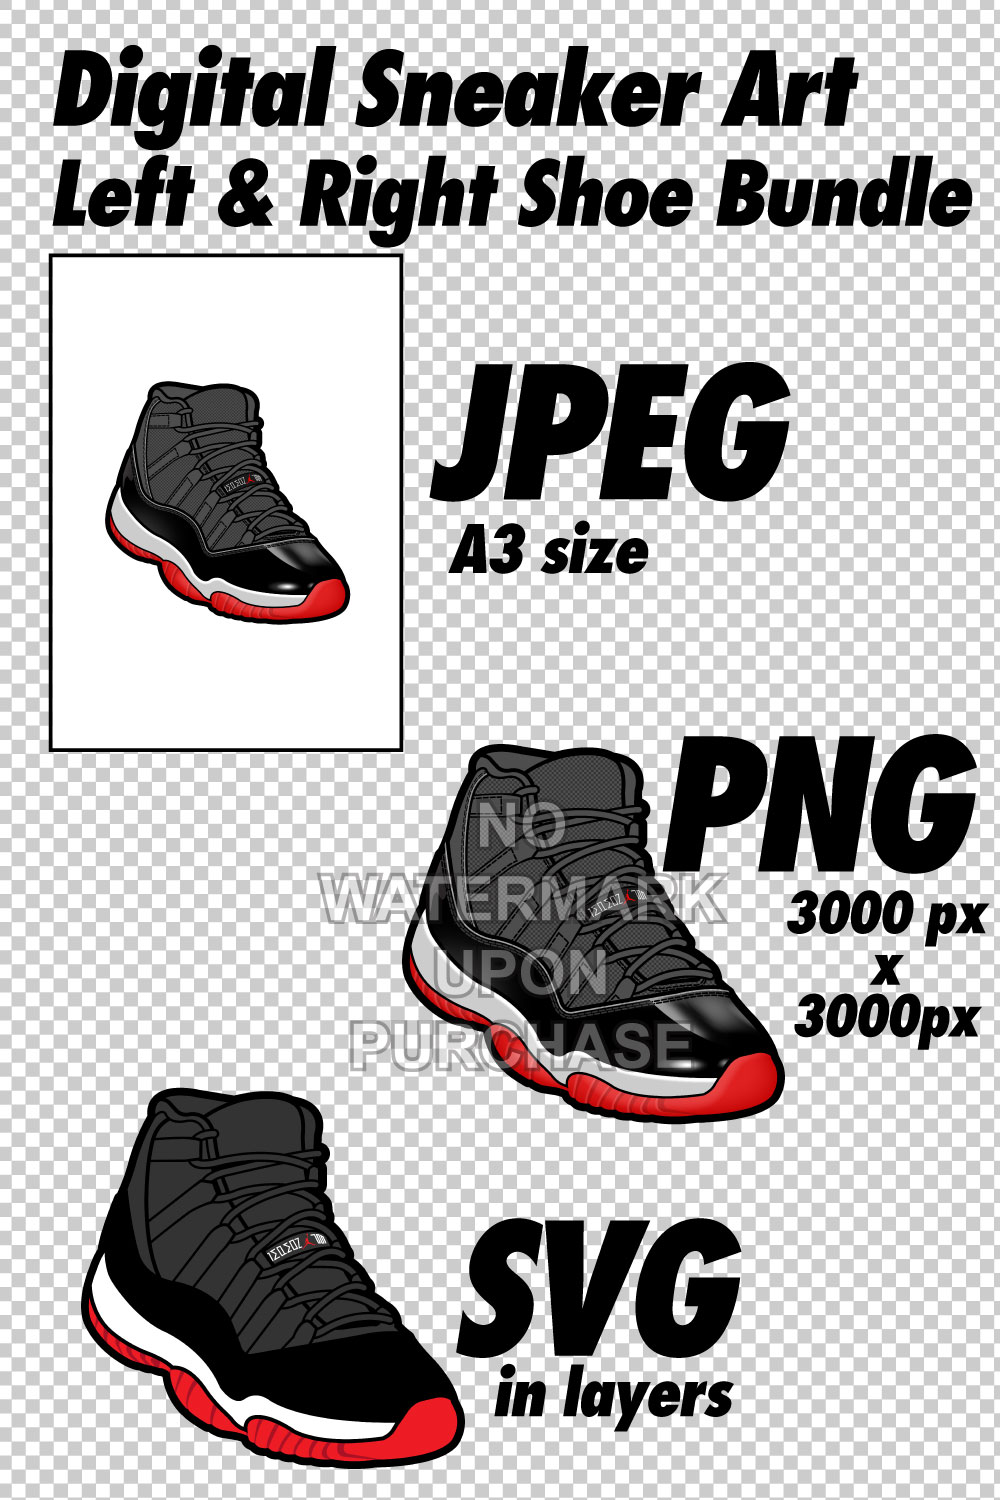 Air Jordan 11 bred JPEG PNG SVG Sneaker Art right & left shoe bundle Digital Download pinterest preview image.